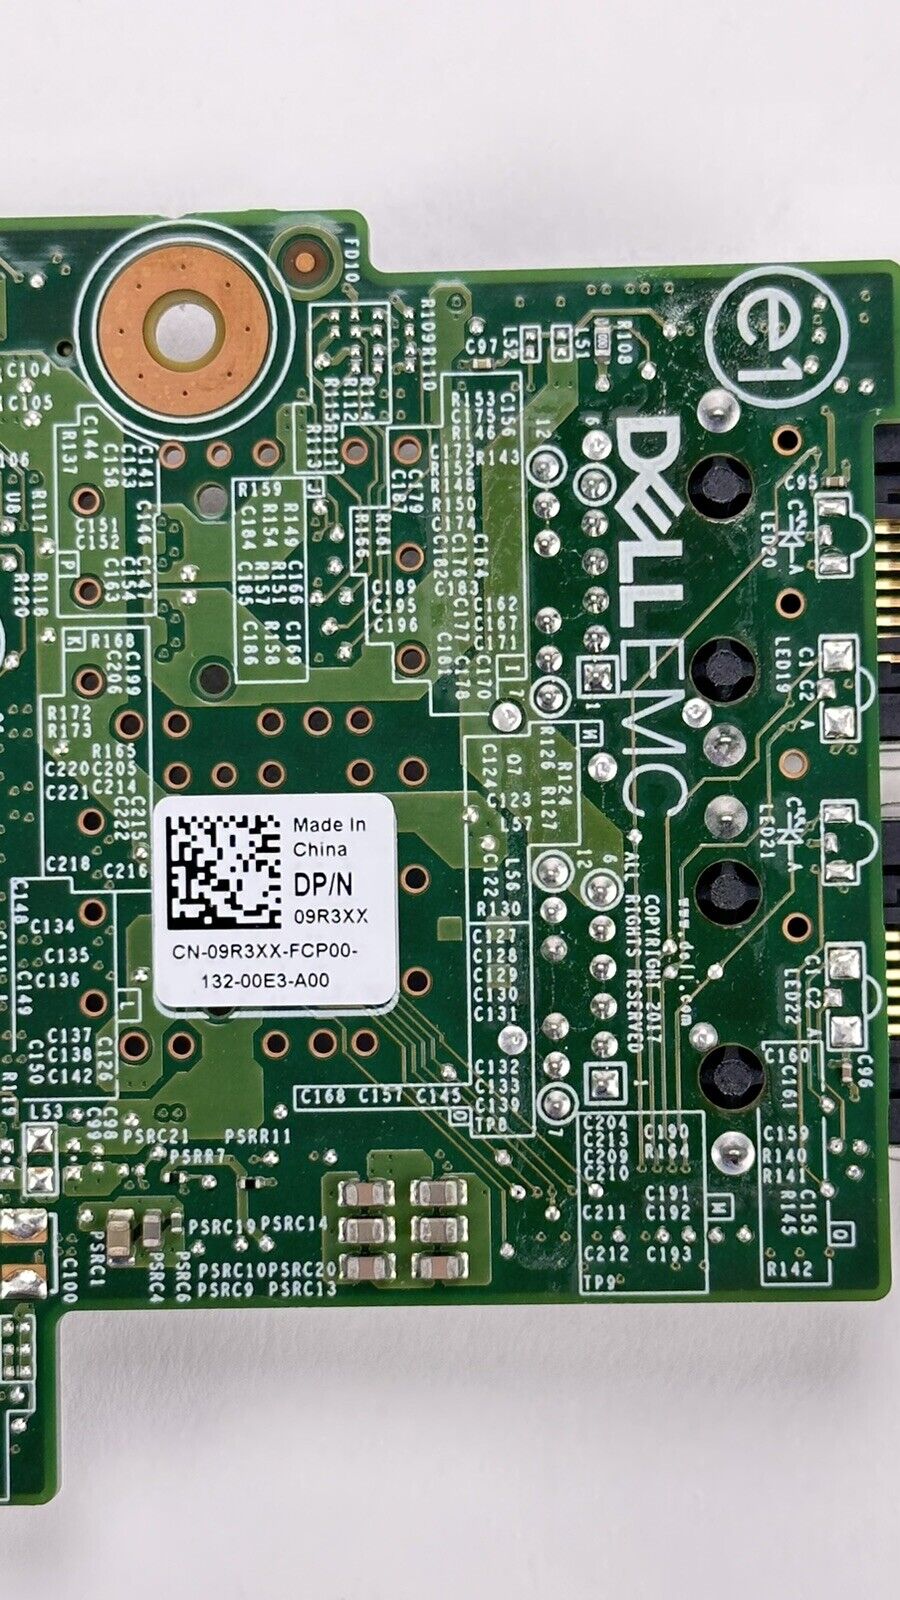 Dell EMC Broadcom 1GbE LOM Dual RJ45 Port Daughter Card R440 R540 R7515 R6515